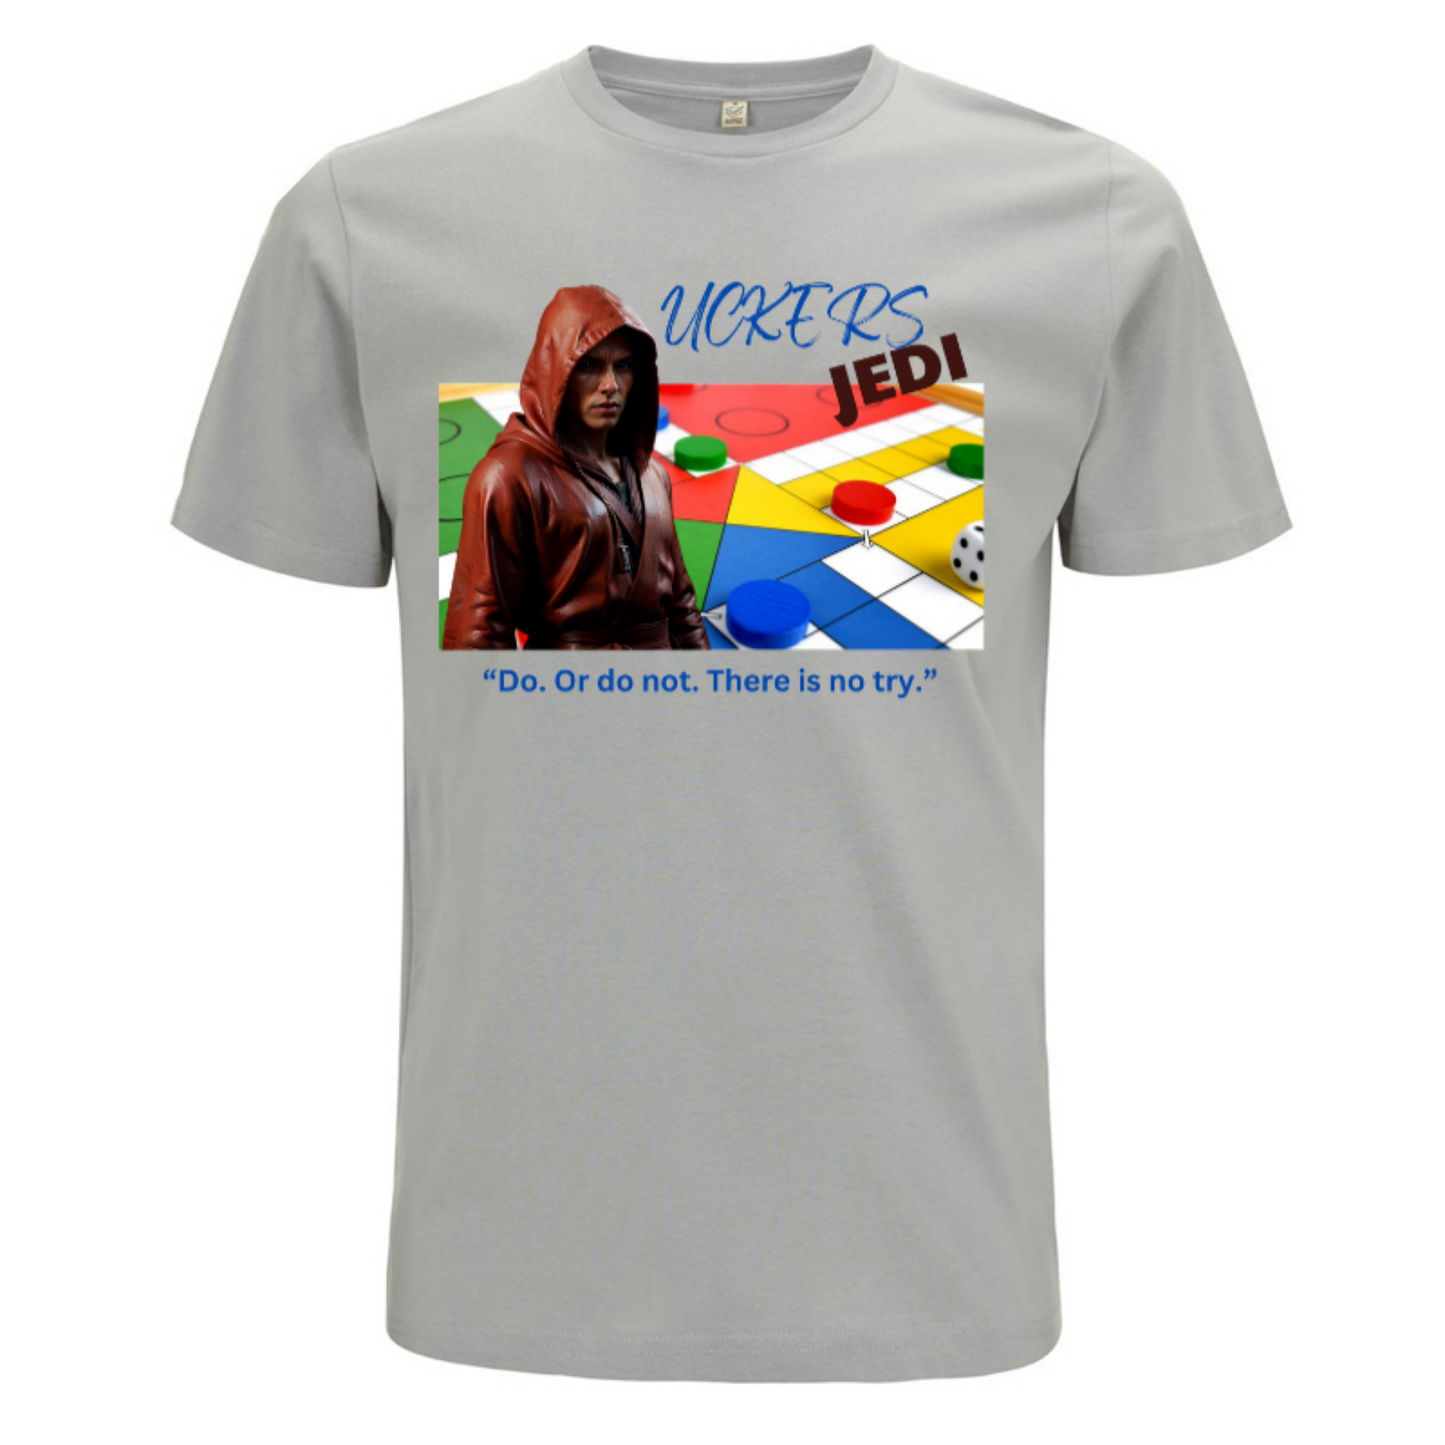 Men's organic T-shirt with printed 'Uckers Jedi' design